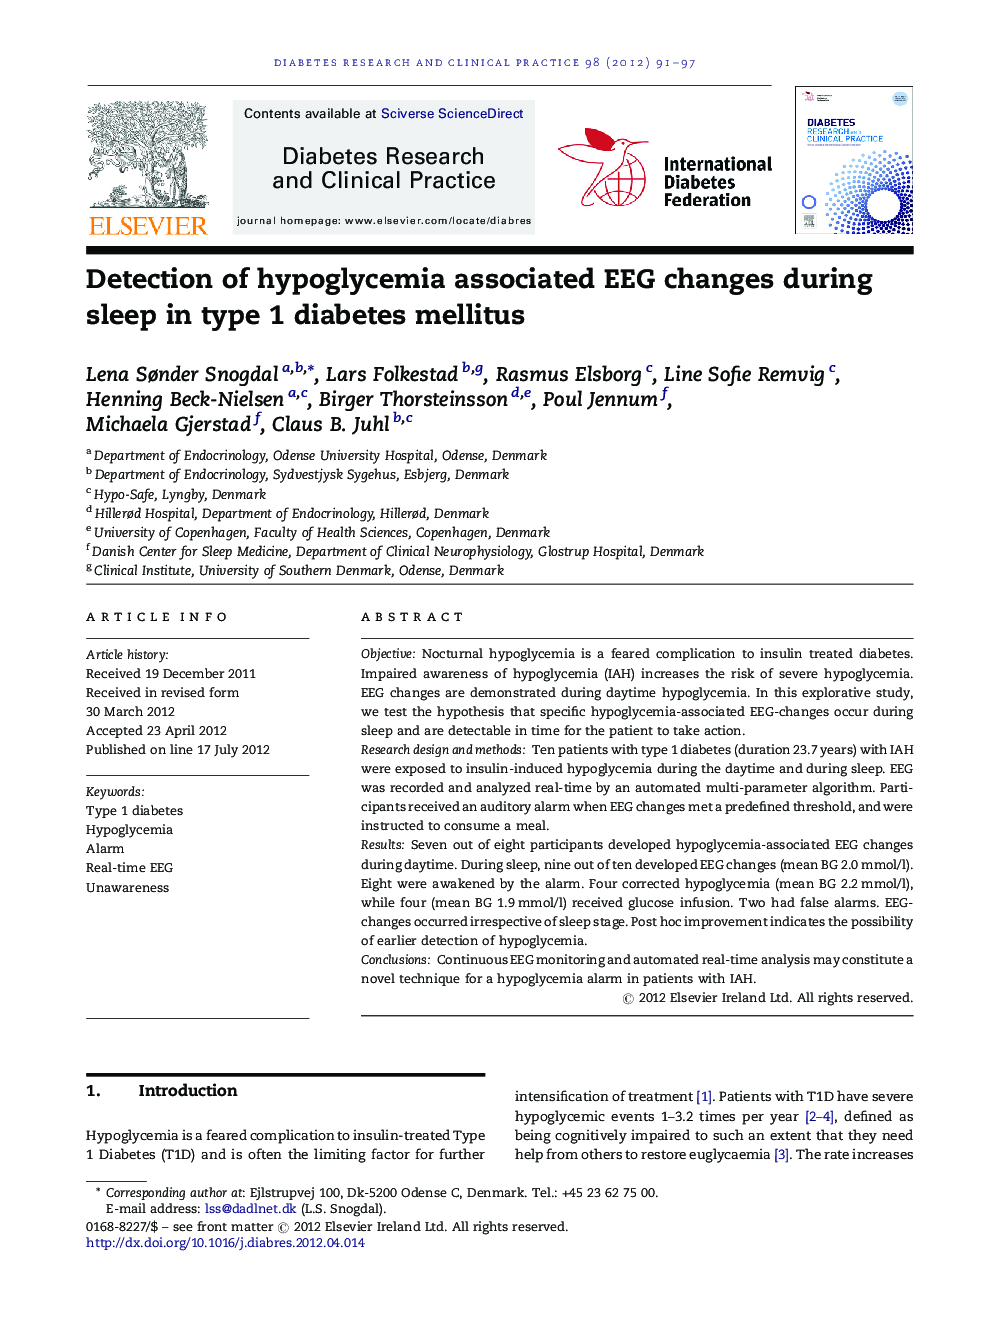 Detection of hypoglycemia associated EEG changes during sleep in type 1 diabetes mellitus